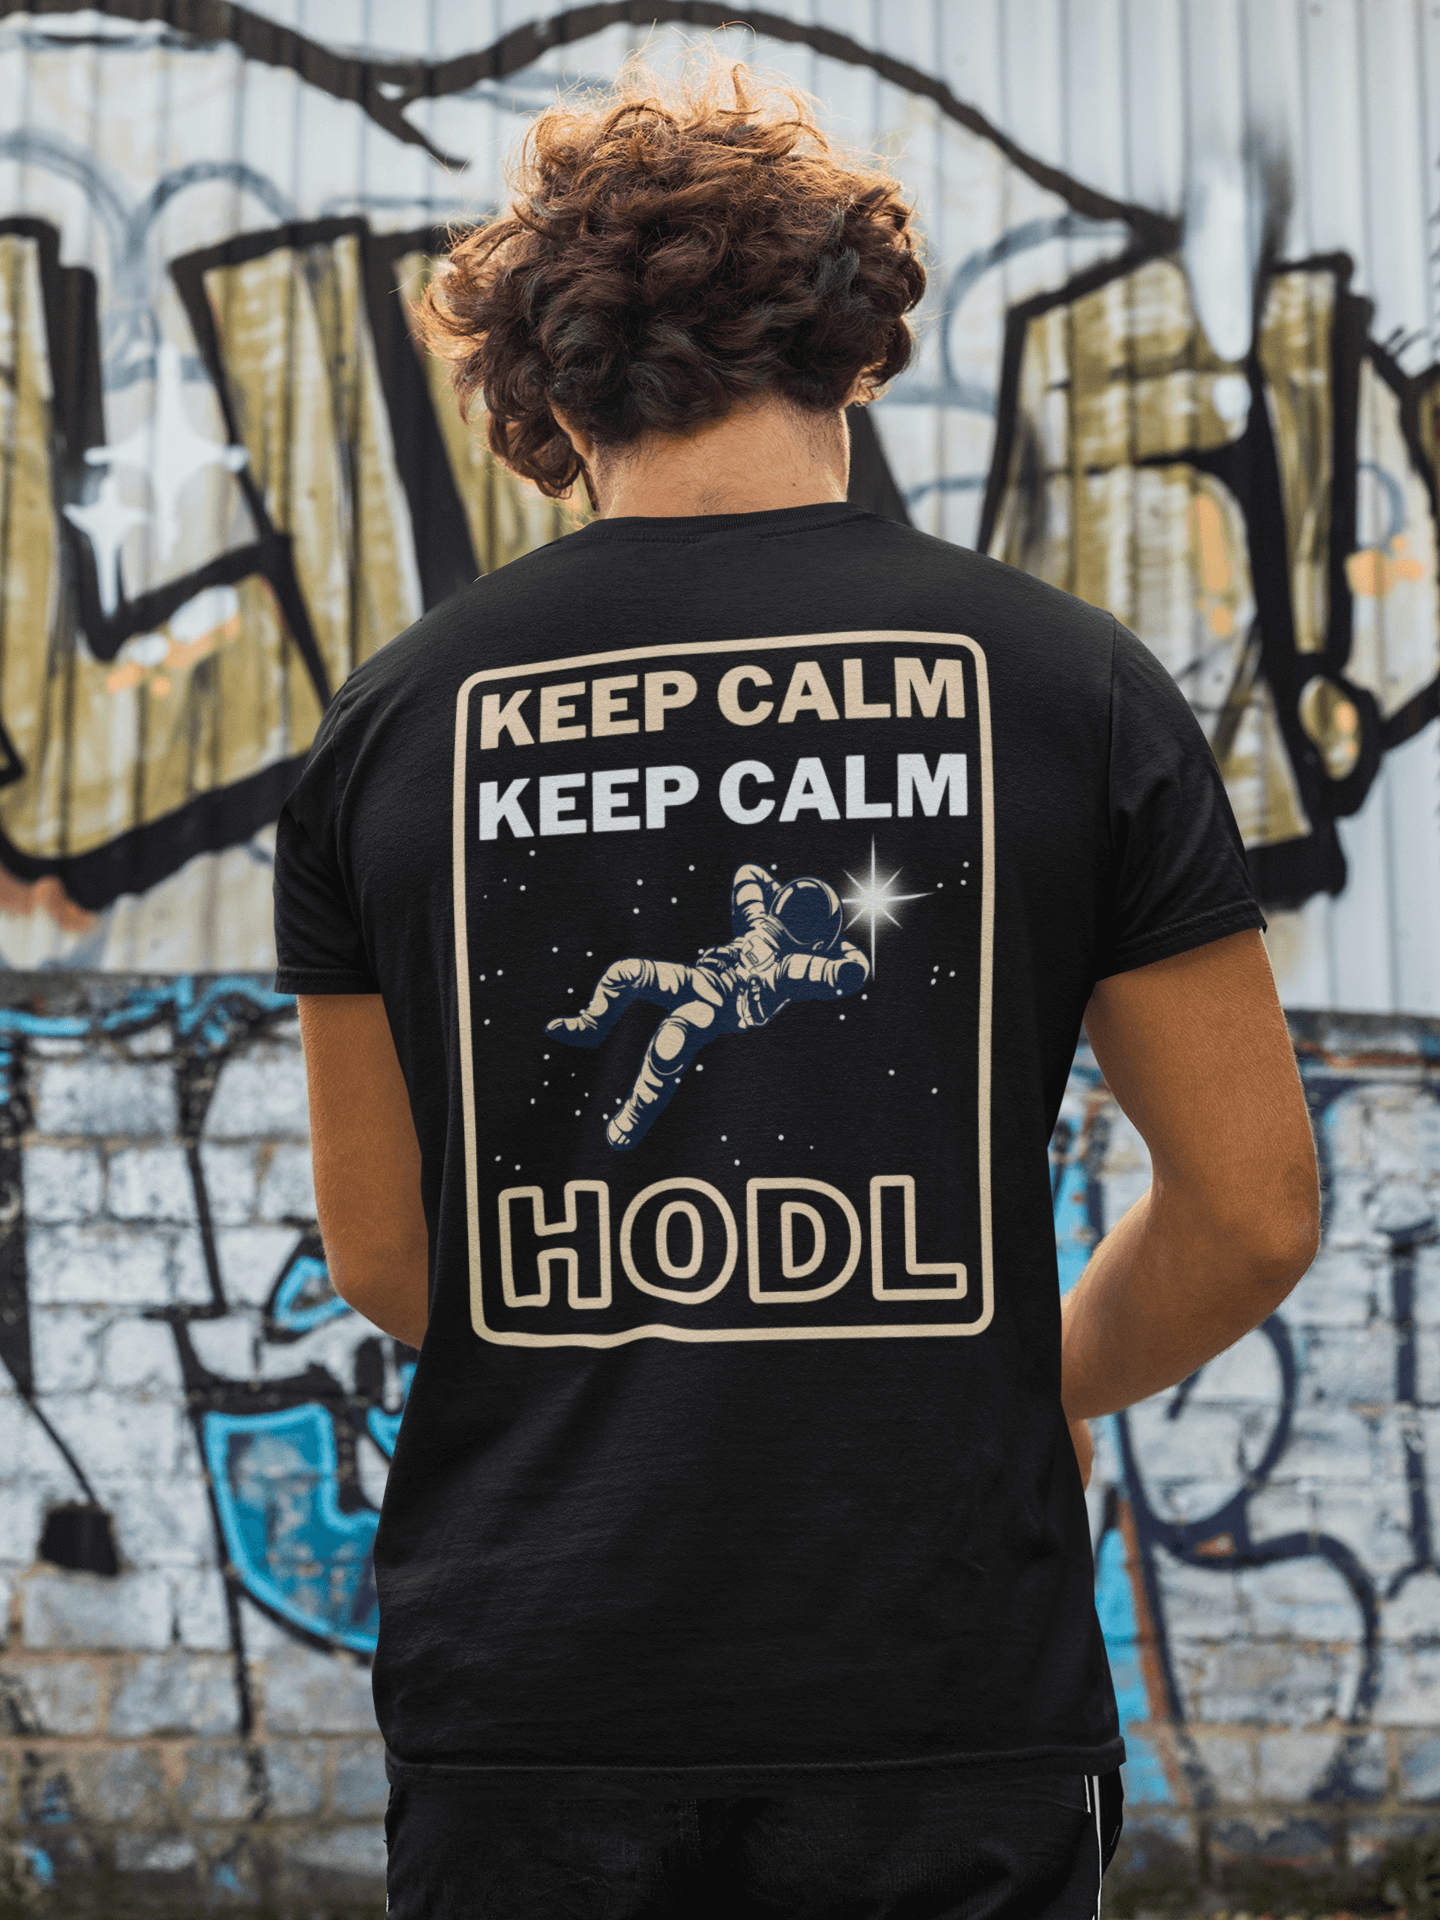 Man facing graffiti wearing "Keep calm and HODL" NFT T-shirt